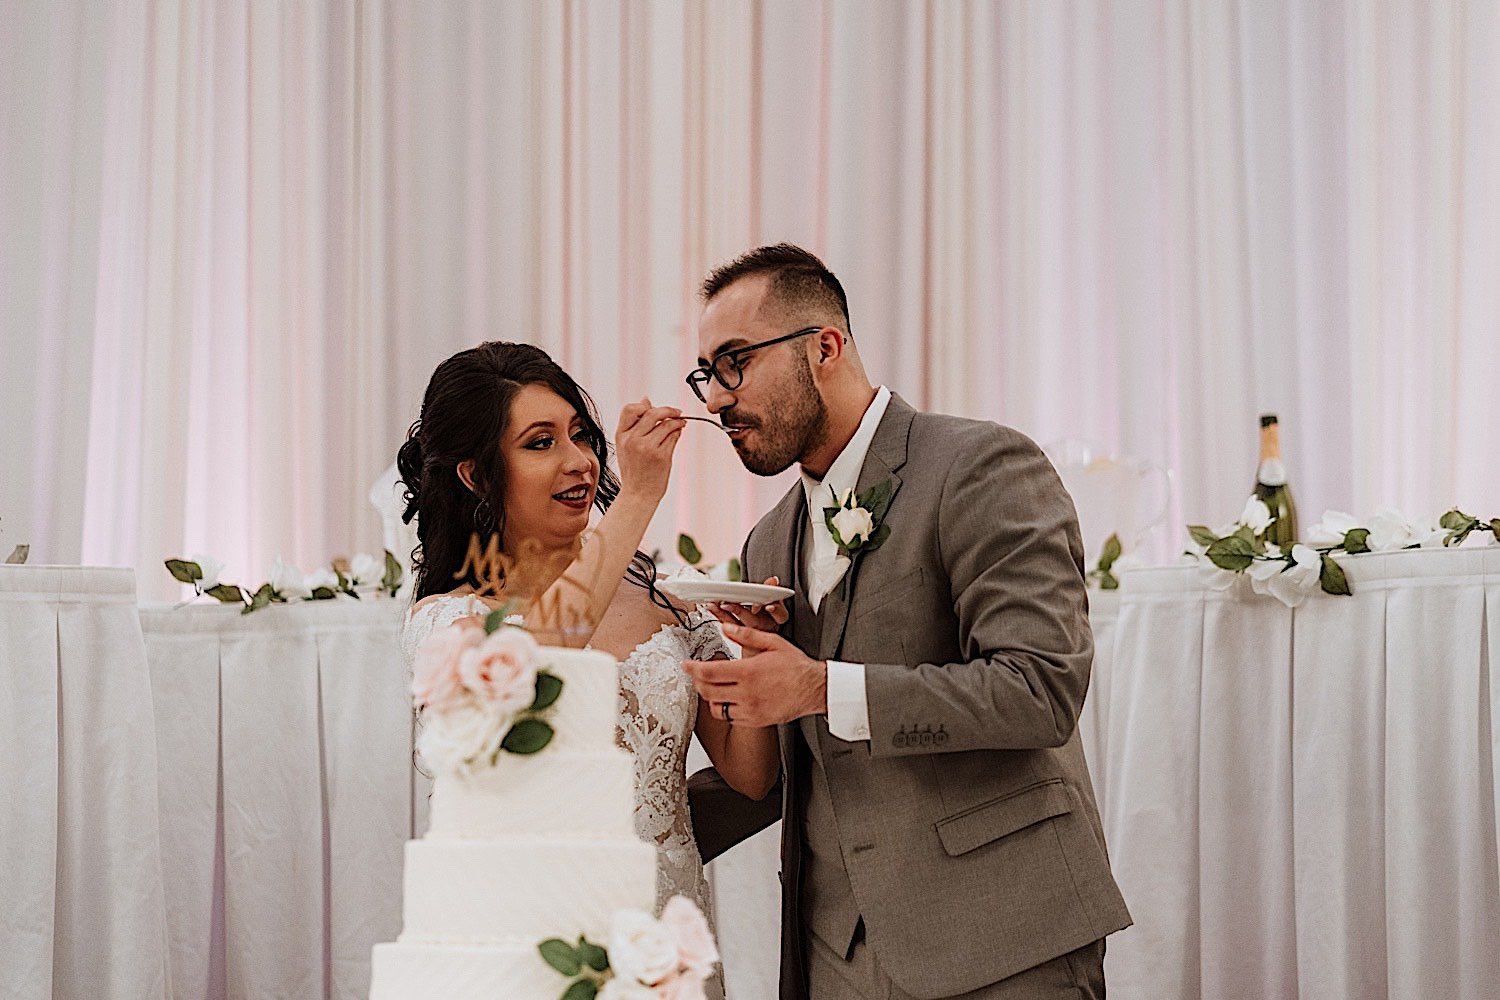 Bride feeds groom a piece of cake during their wedding reception